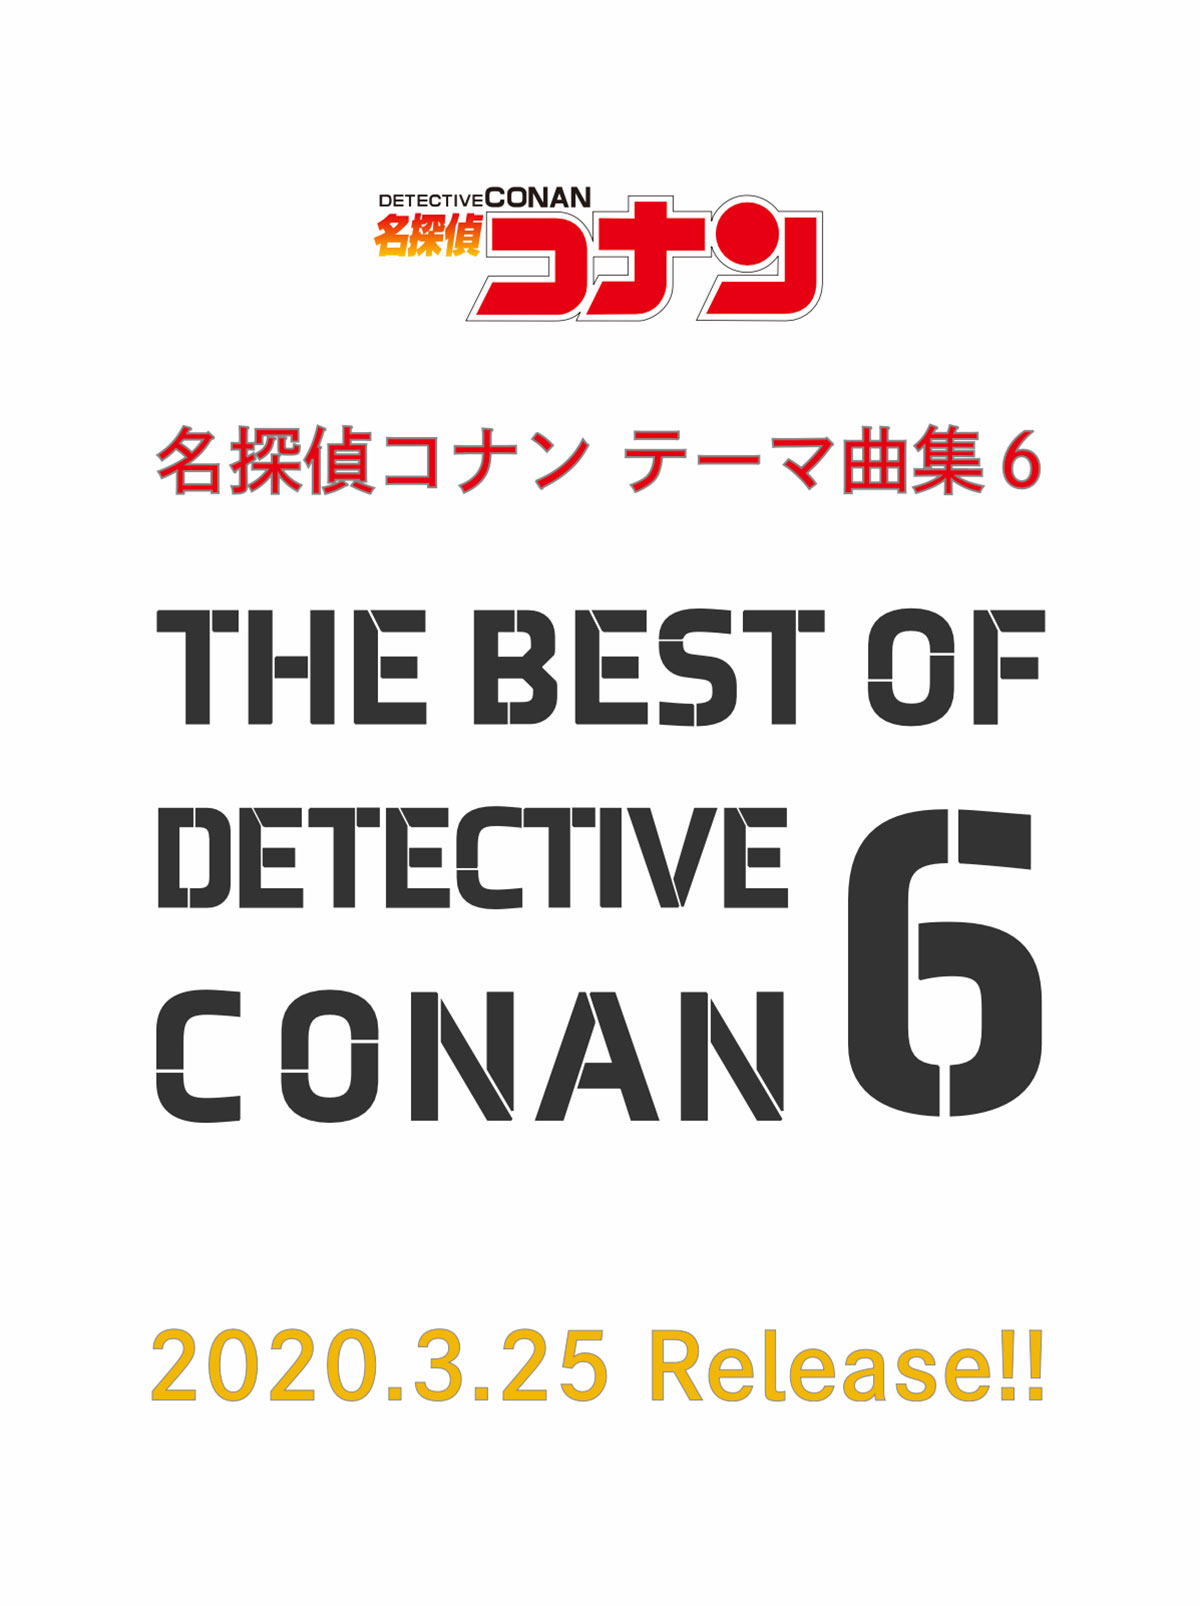 B Z 稲葉浩志などの話題曲収録 伝説の コナンベスト 第6弾がリリース決定 名探偵コナン Conan コナンop コナンed B Z 超まとめ速報